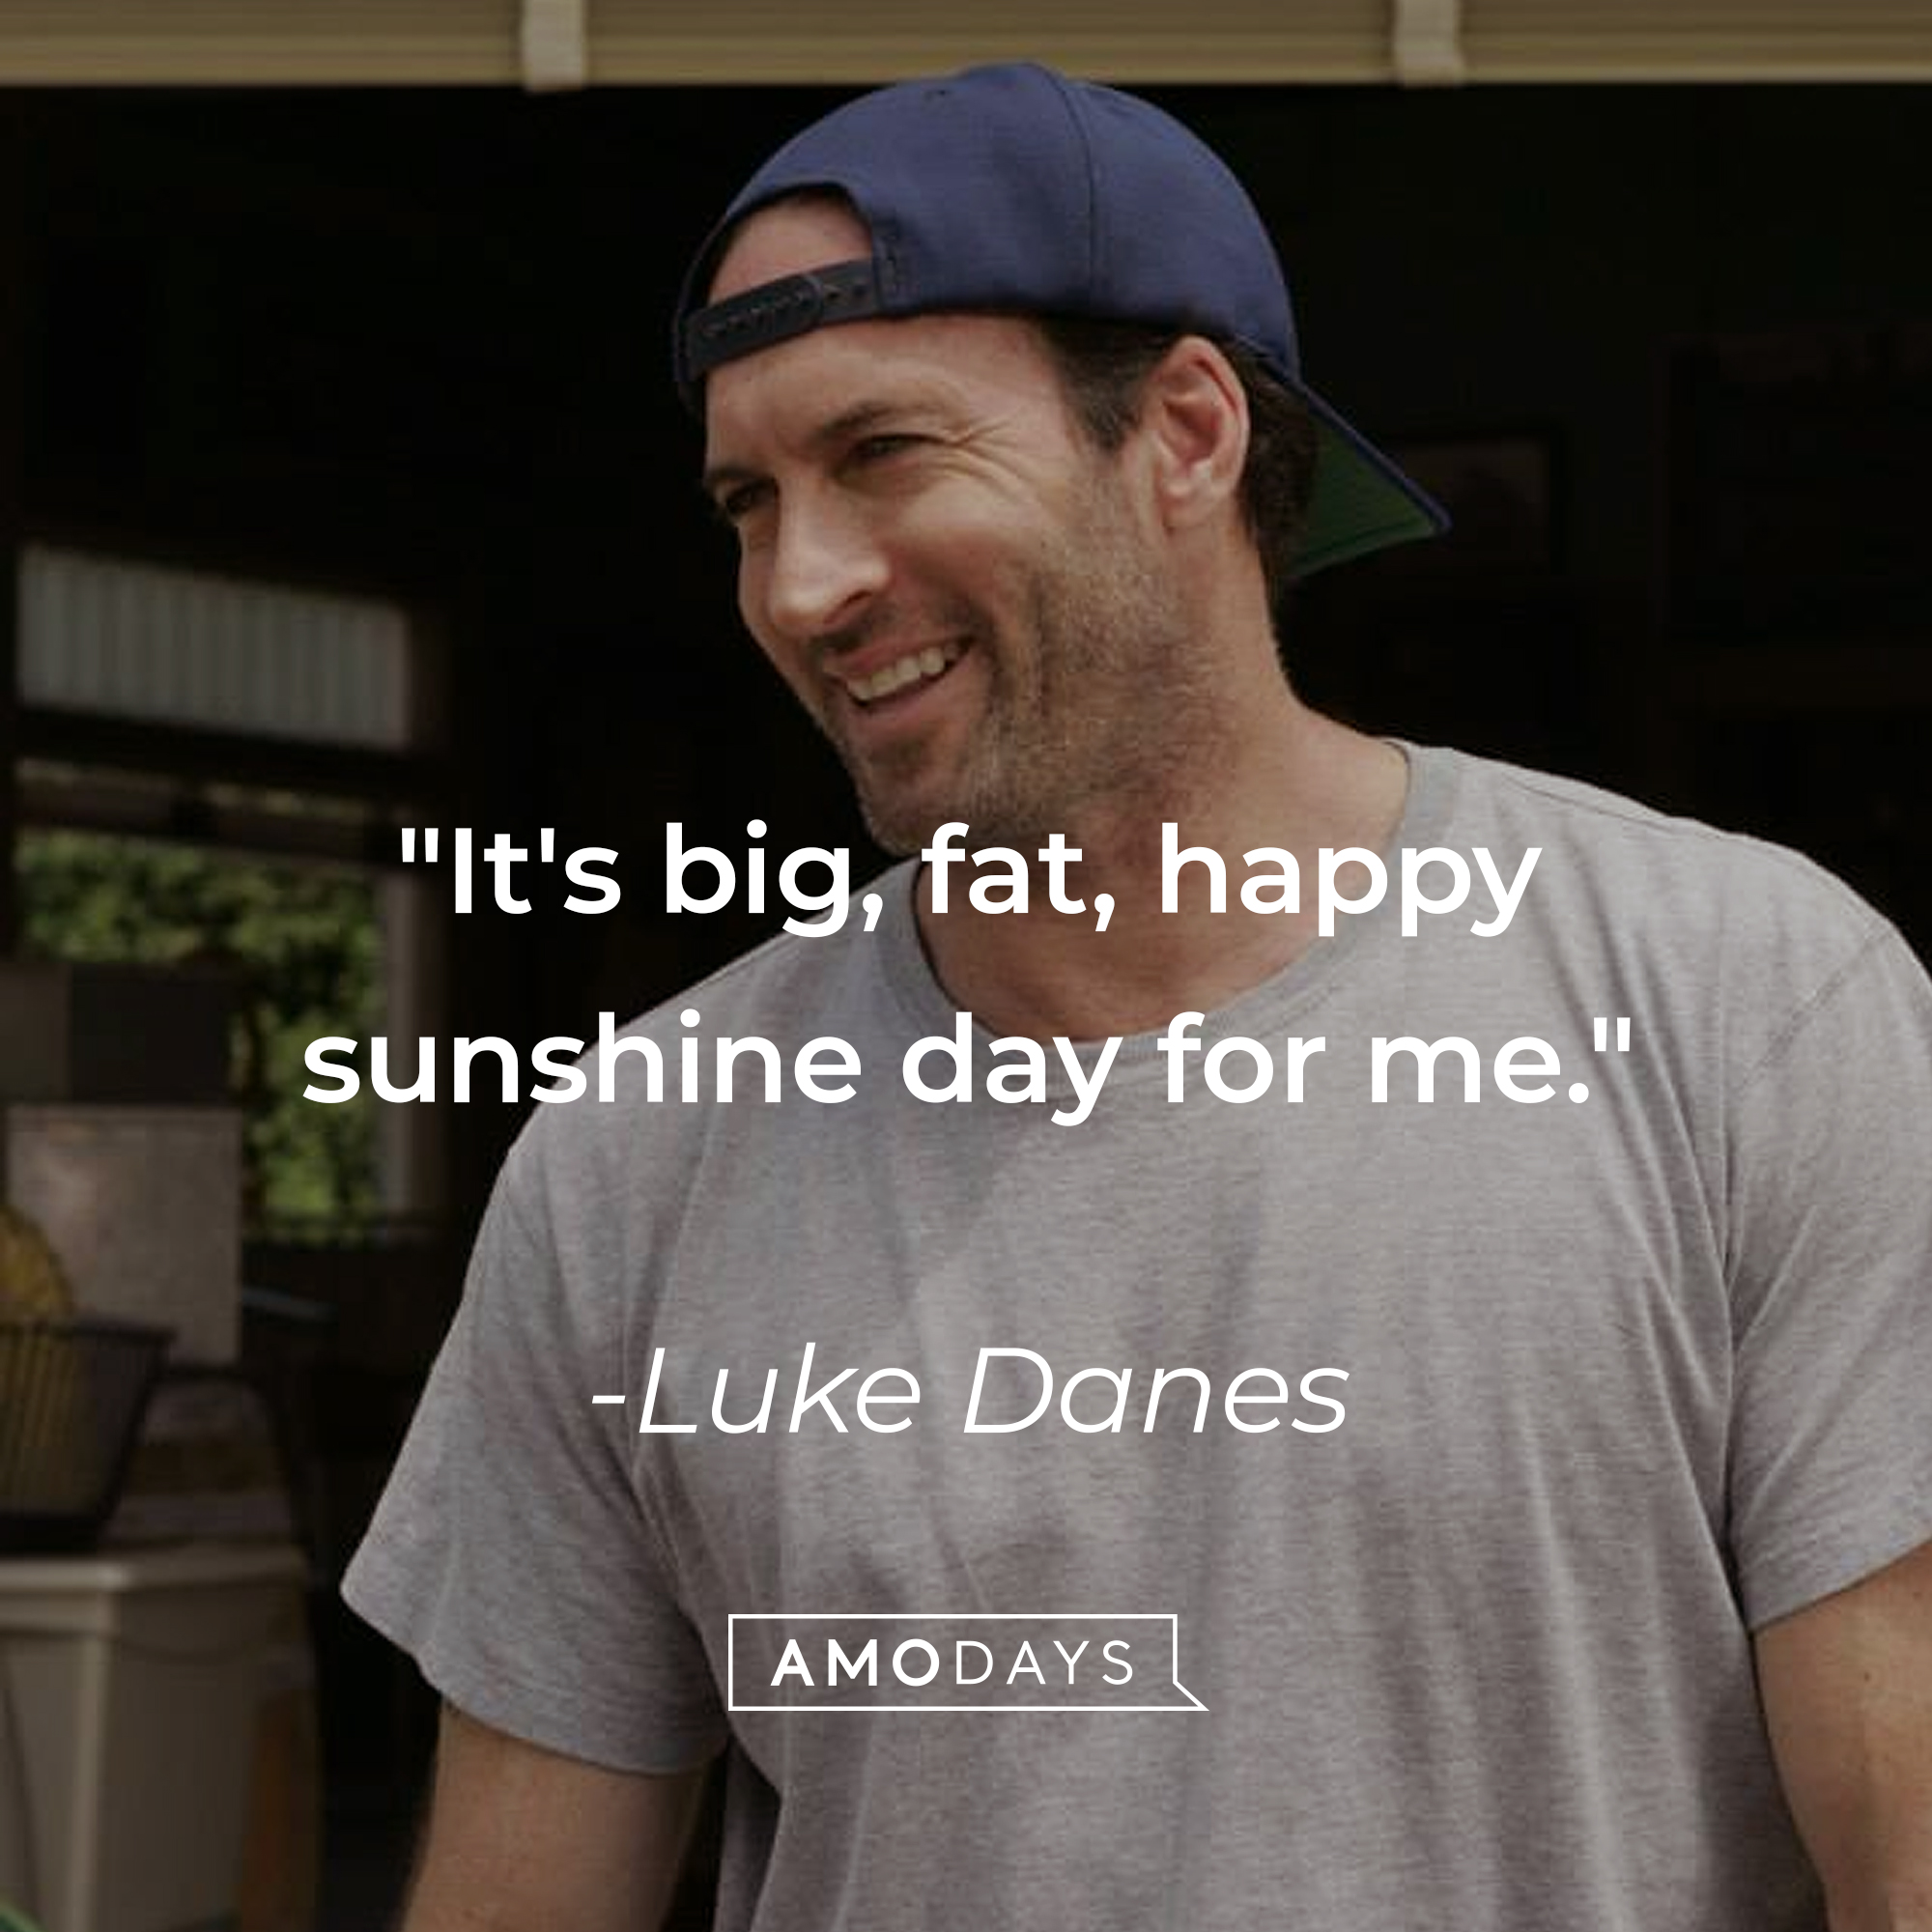 Luke Danes' quote: "It's big, fat, happy sunshine day for me." | Source: Facebook/GilmoreGirls